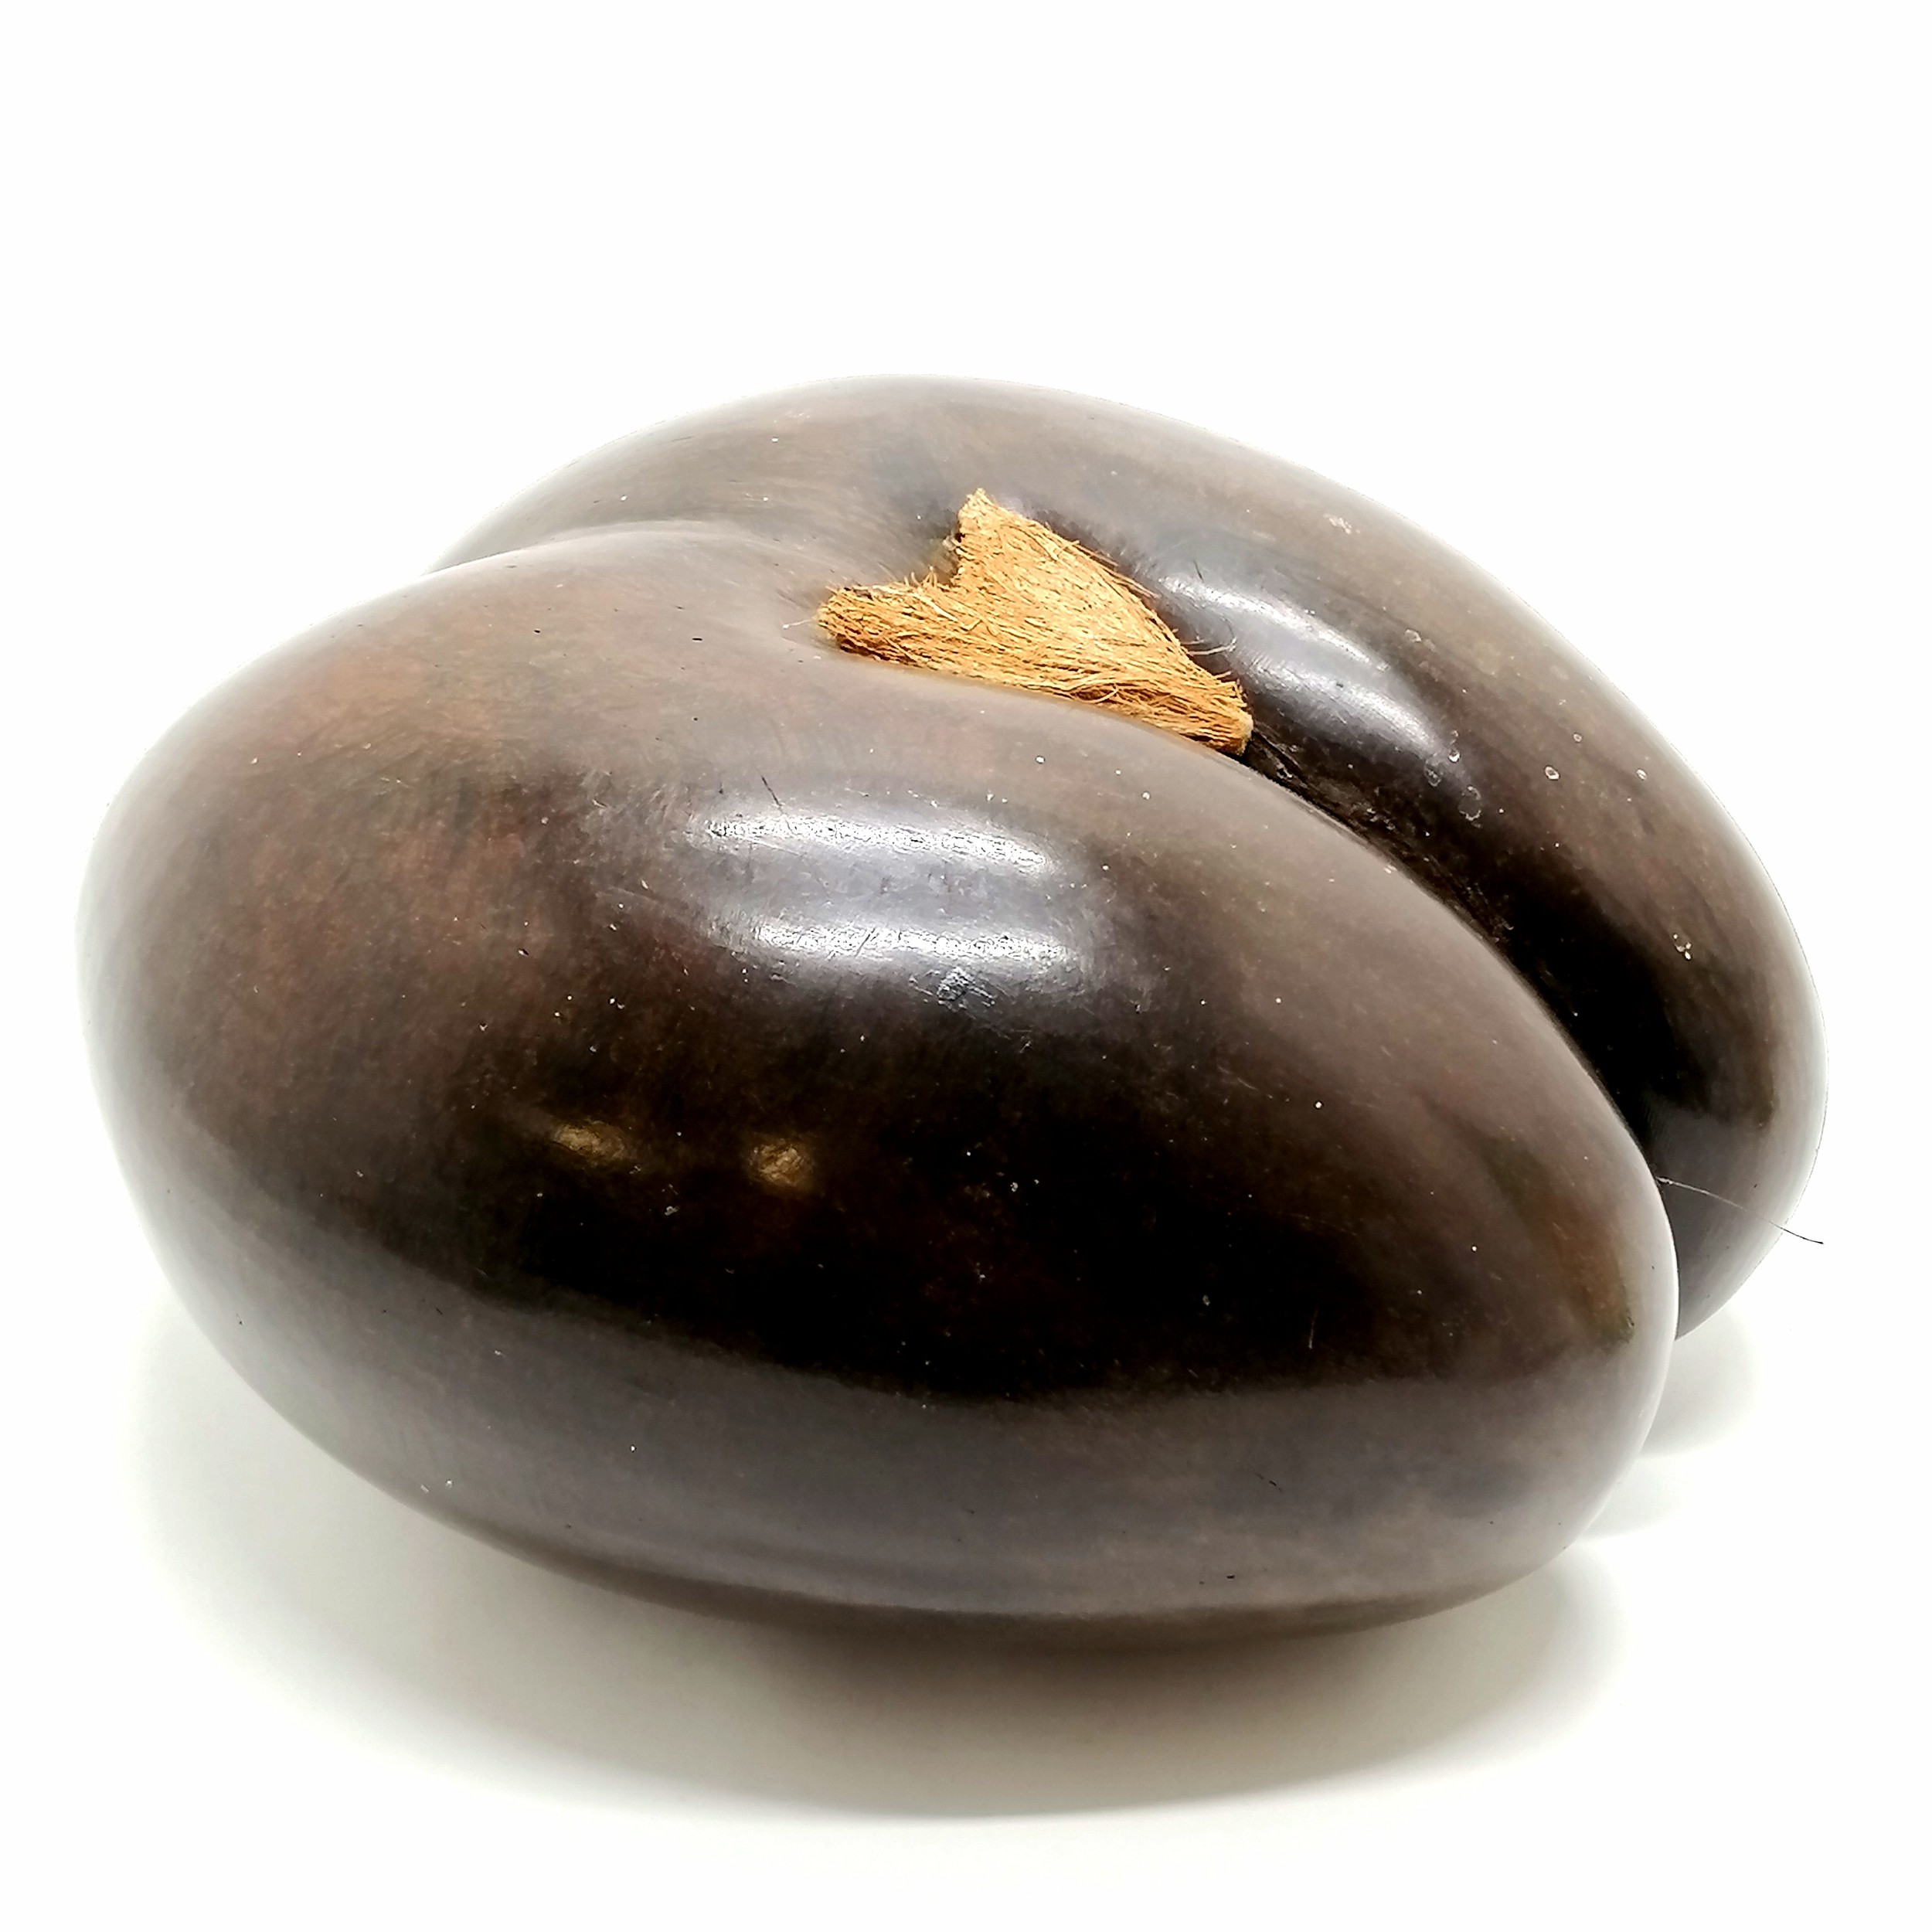 Coco de mer (Lodoicea) nut / seed - 25cm x 26cm & 1.1kg - Image 4 of 4